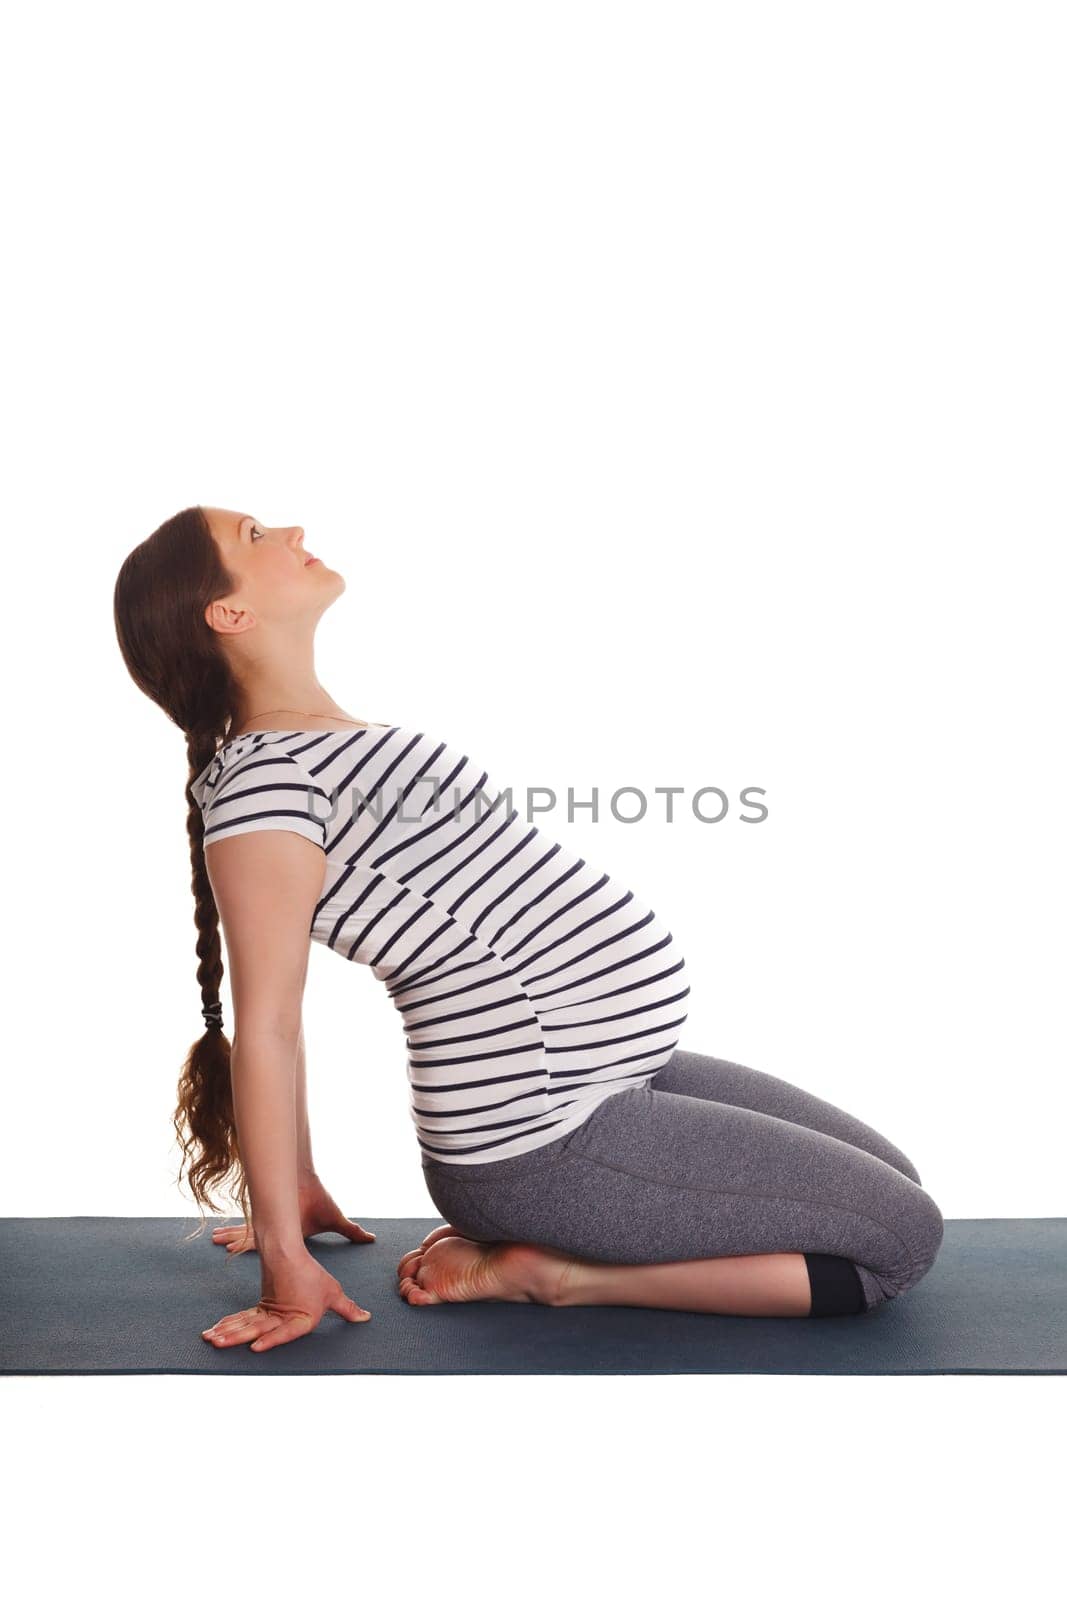 Pregnancy yoga exercise - pregnant woman doing yoga asana Ustrasana Camel Pose easy Variation Hands On Floor isolated on white background